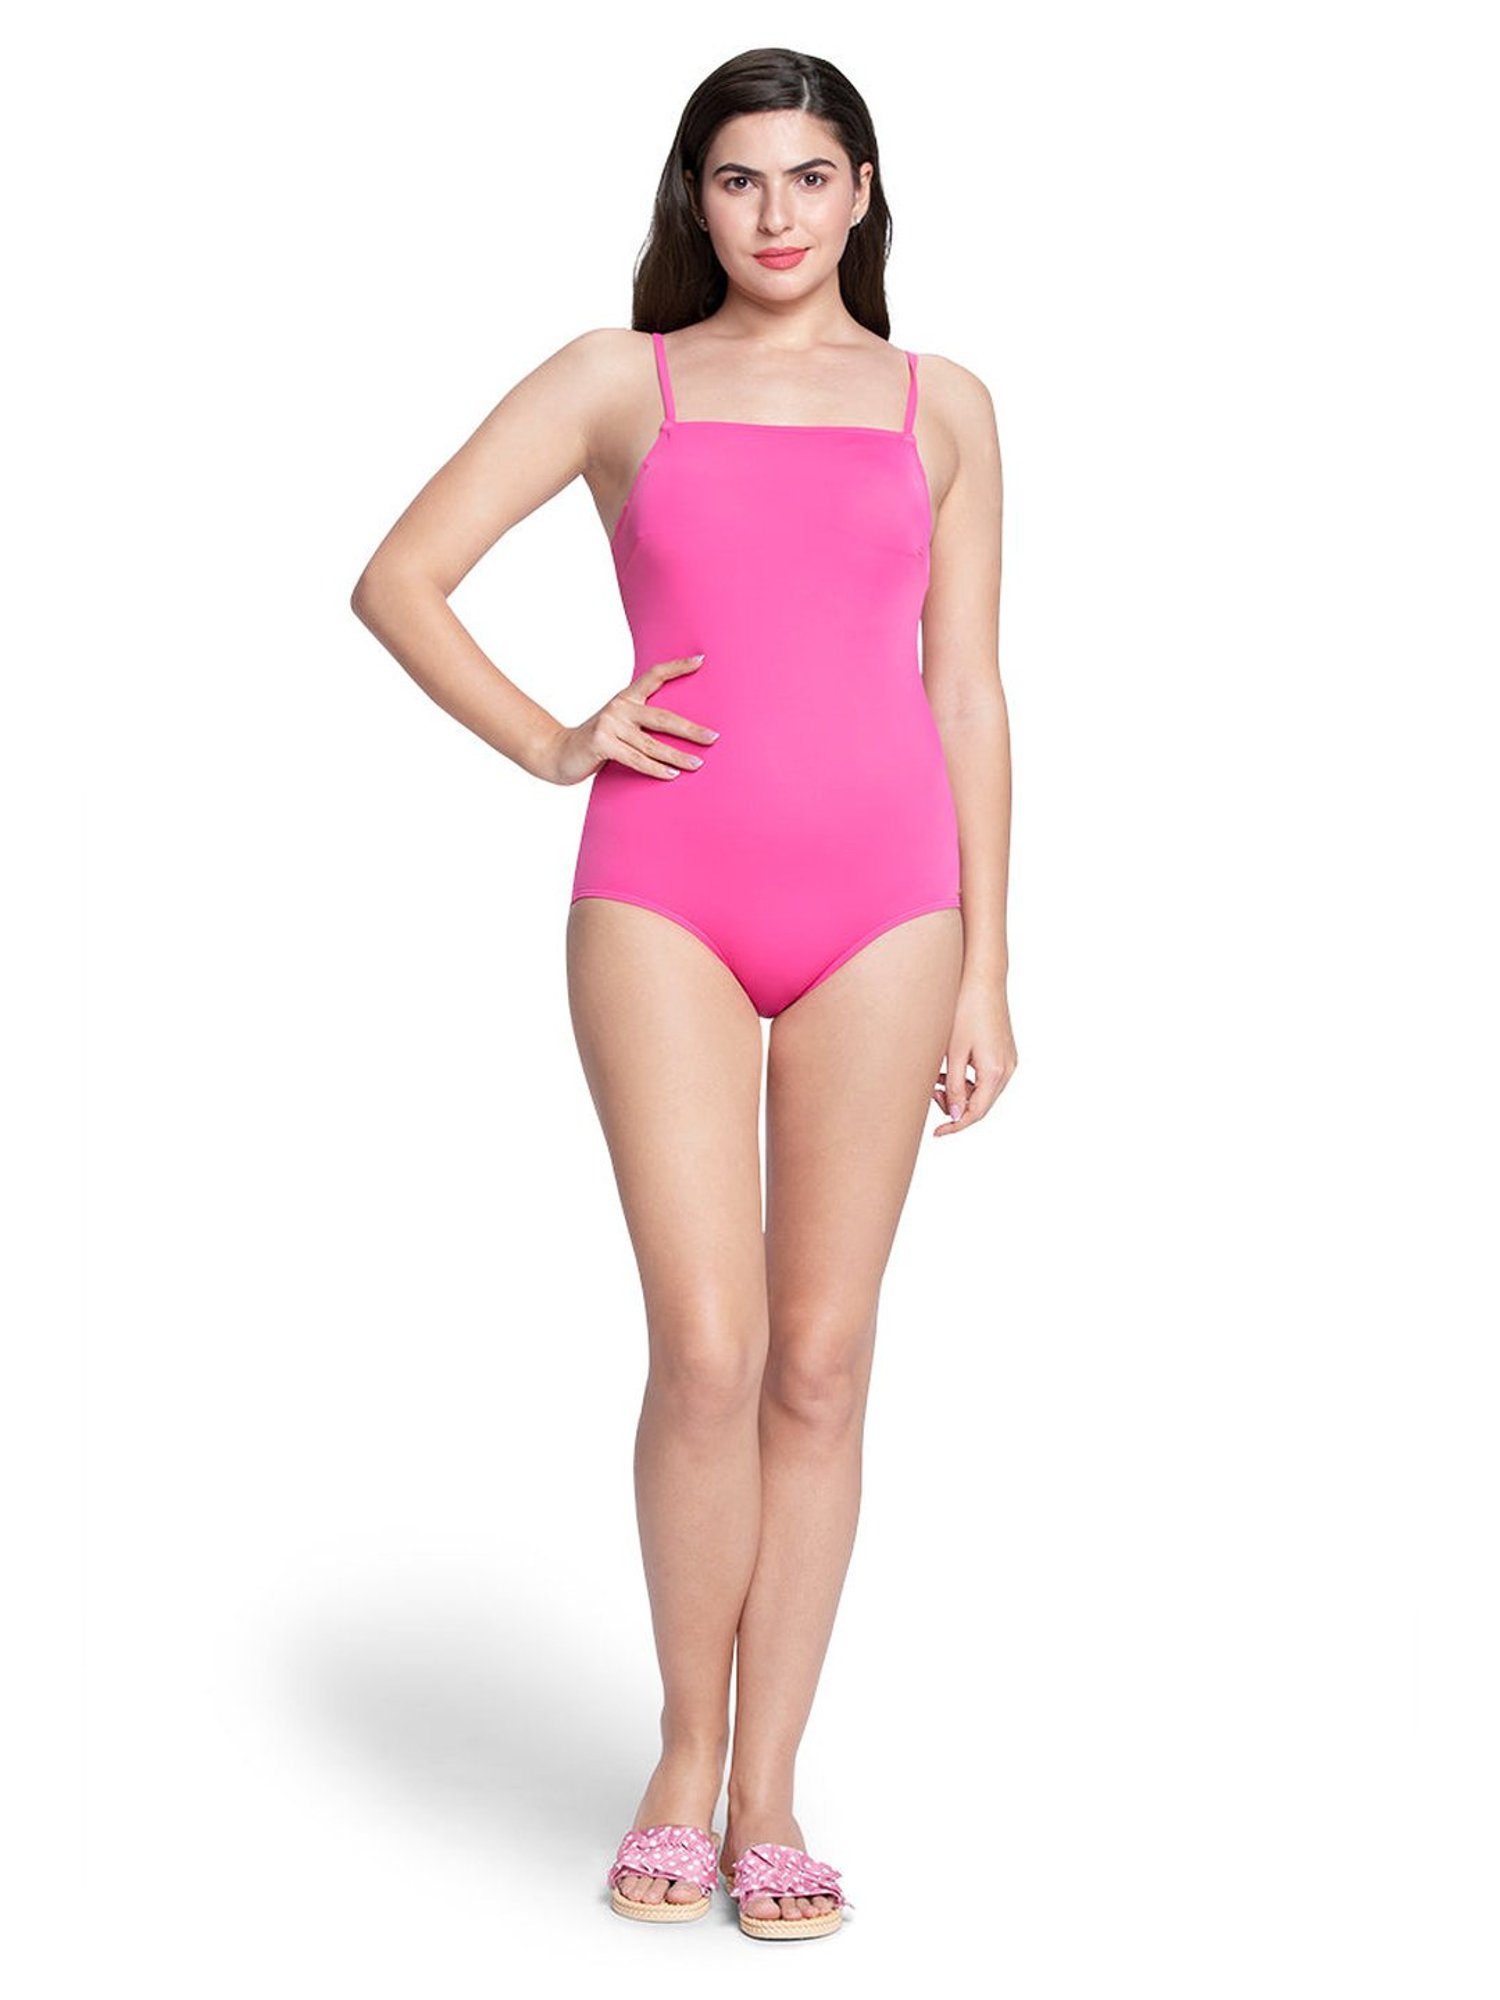 N Gal Bikini Swimwear - Buy N Gal Bikini Swimwear online in India